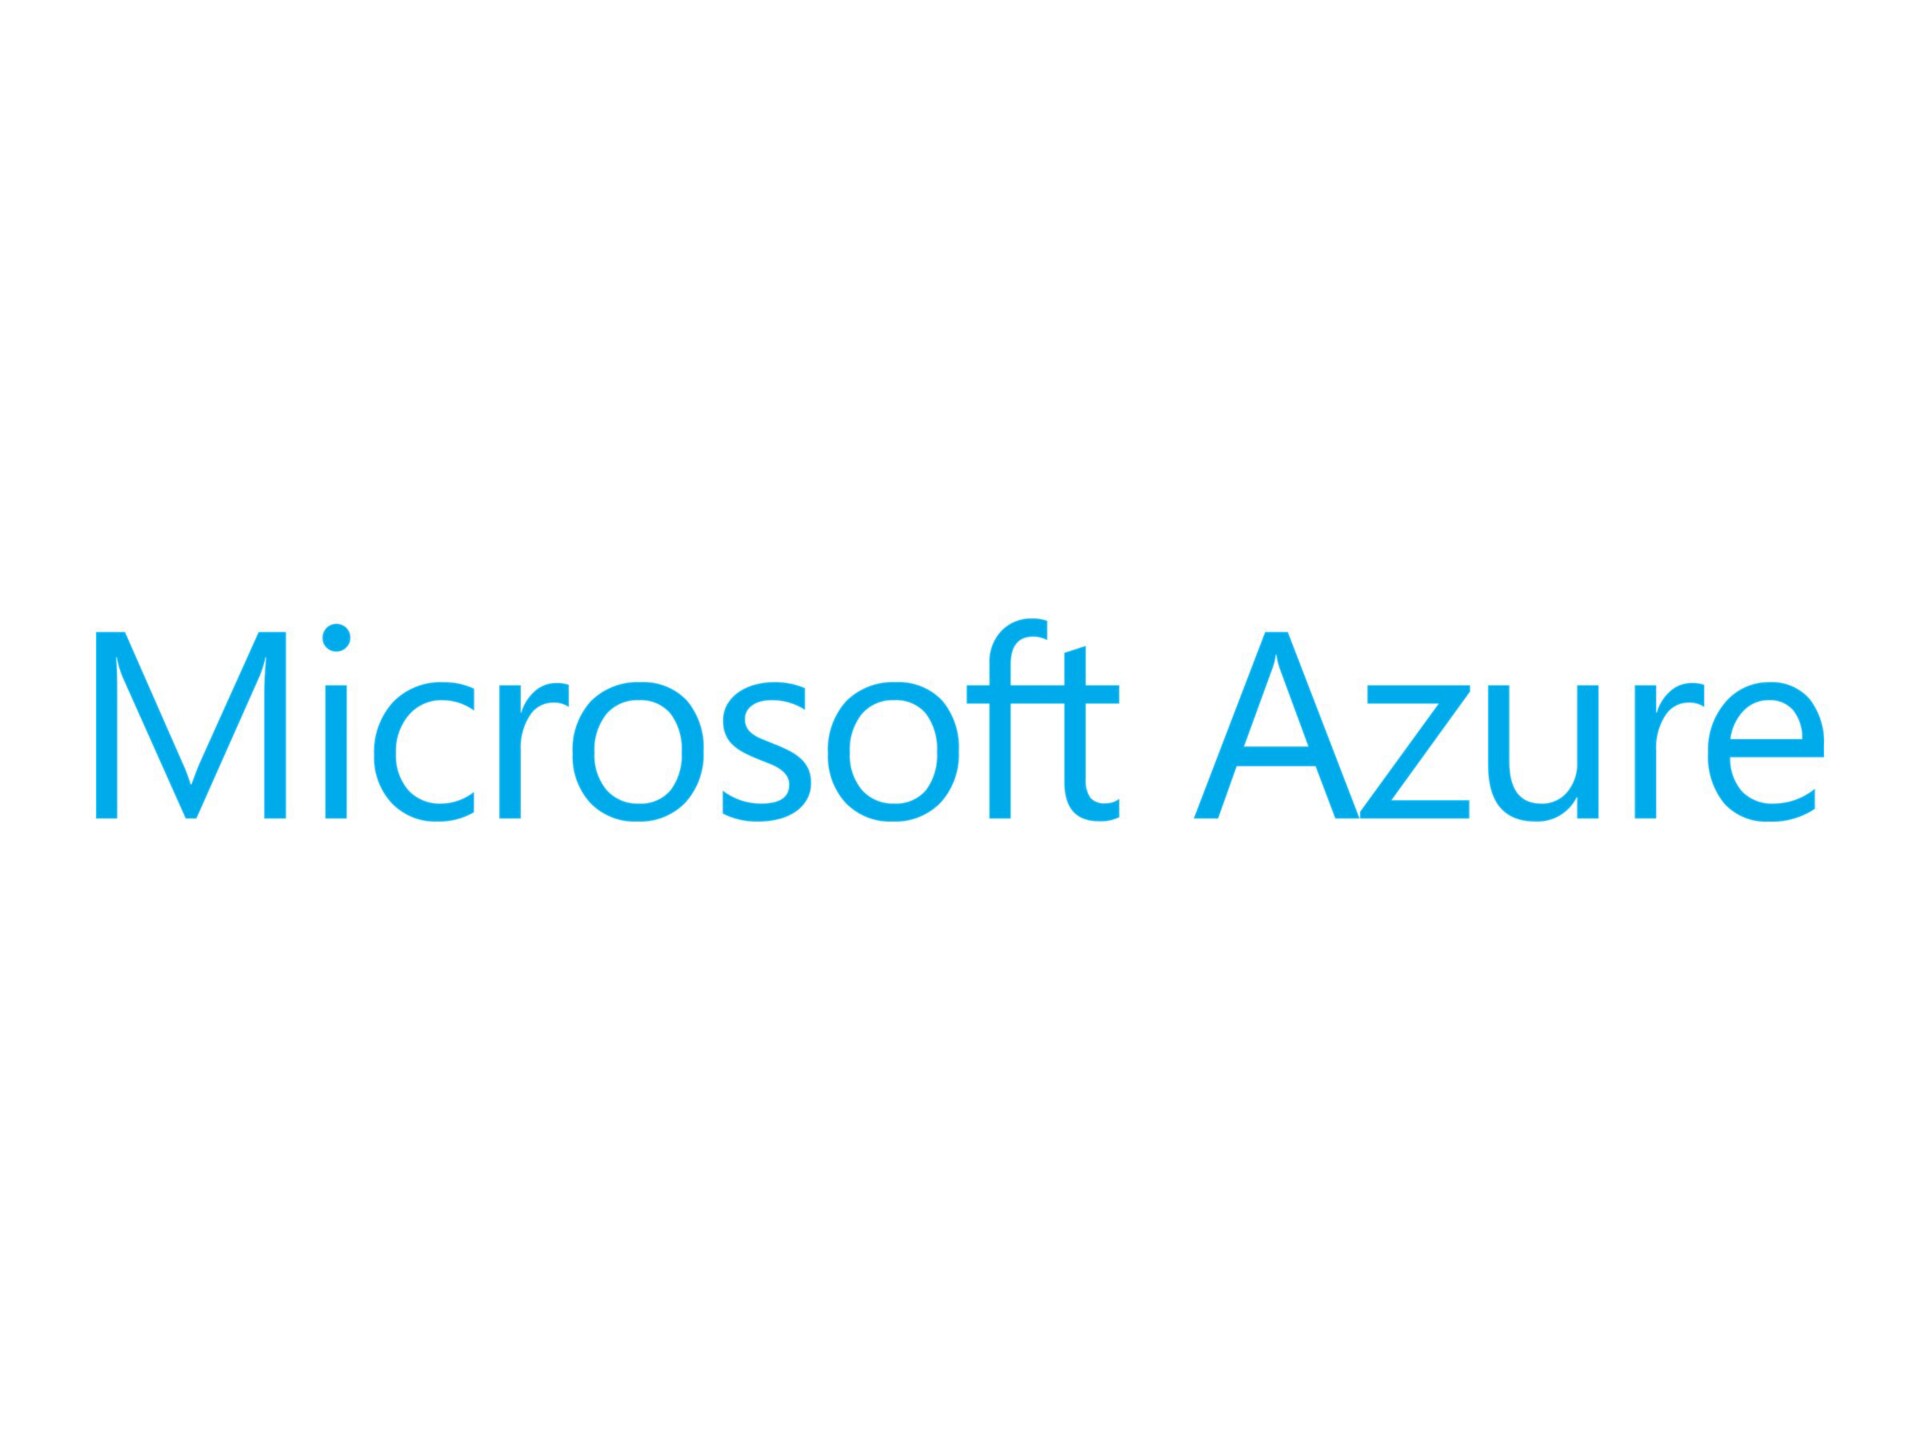 Microsoft Azure Active Directory Premium - subscription license (1 year) - 1 user